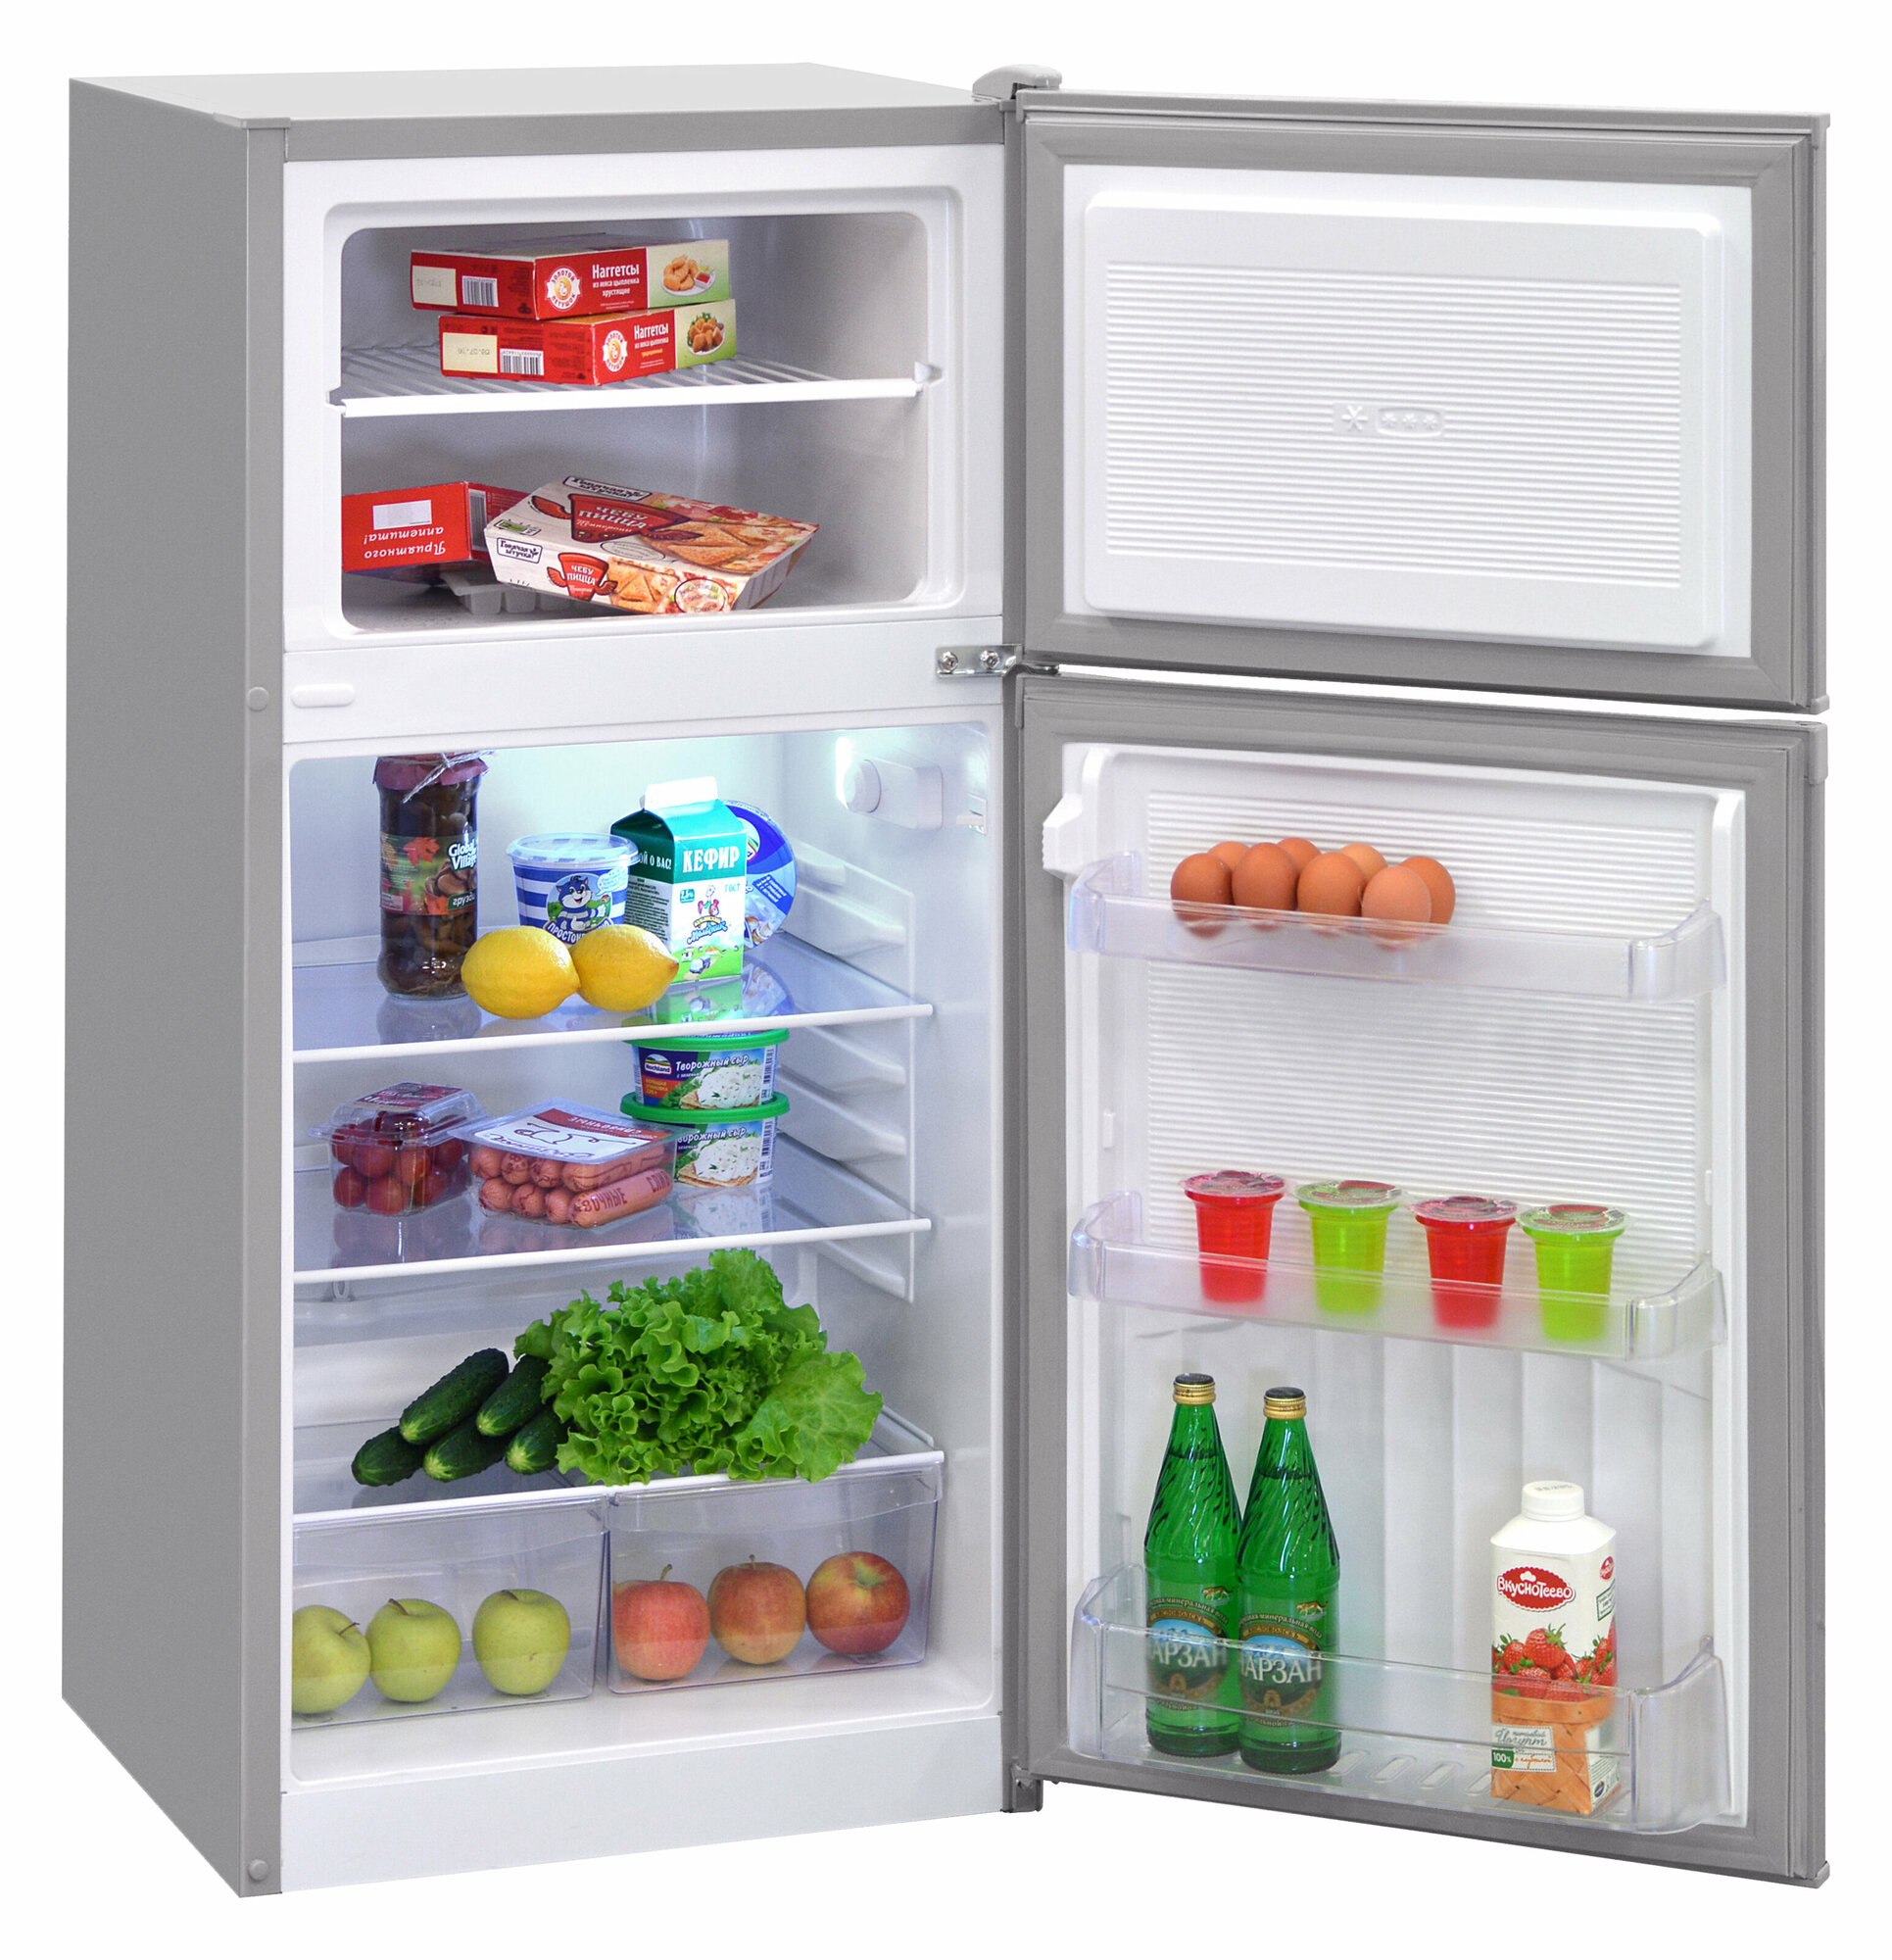 Холодильник NORDFROST NRT 143 132